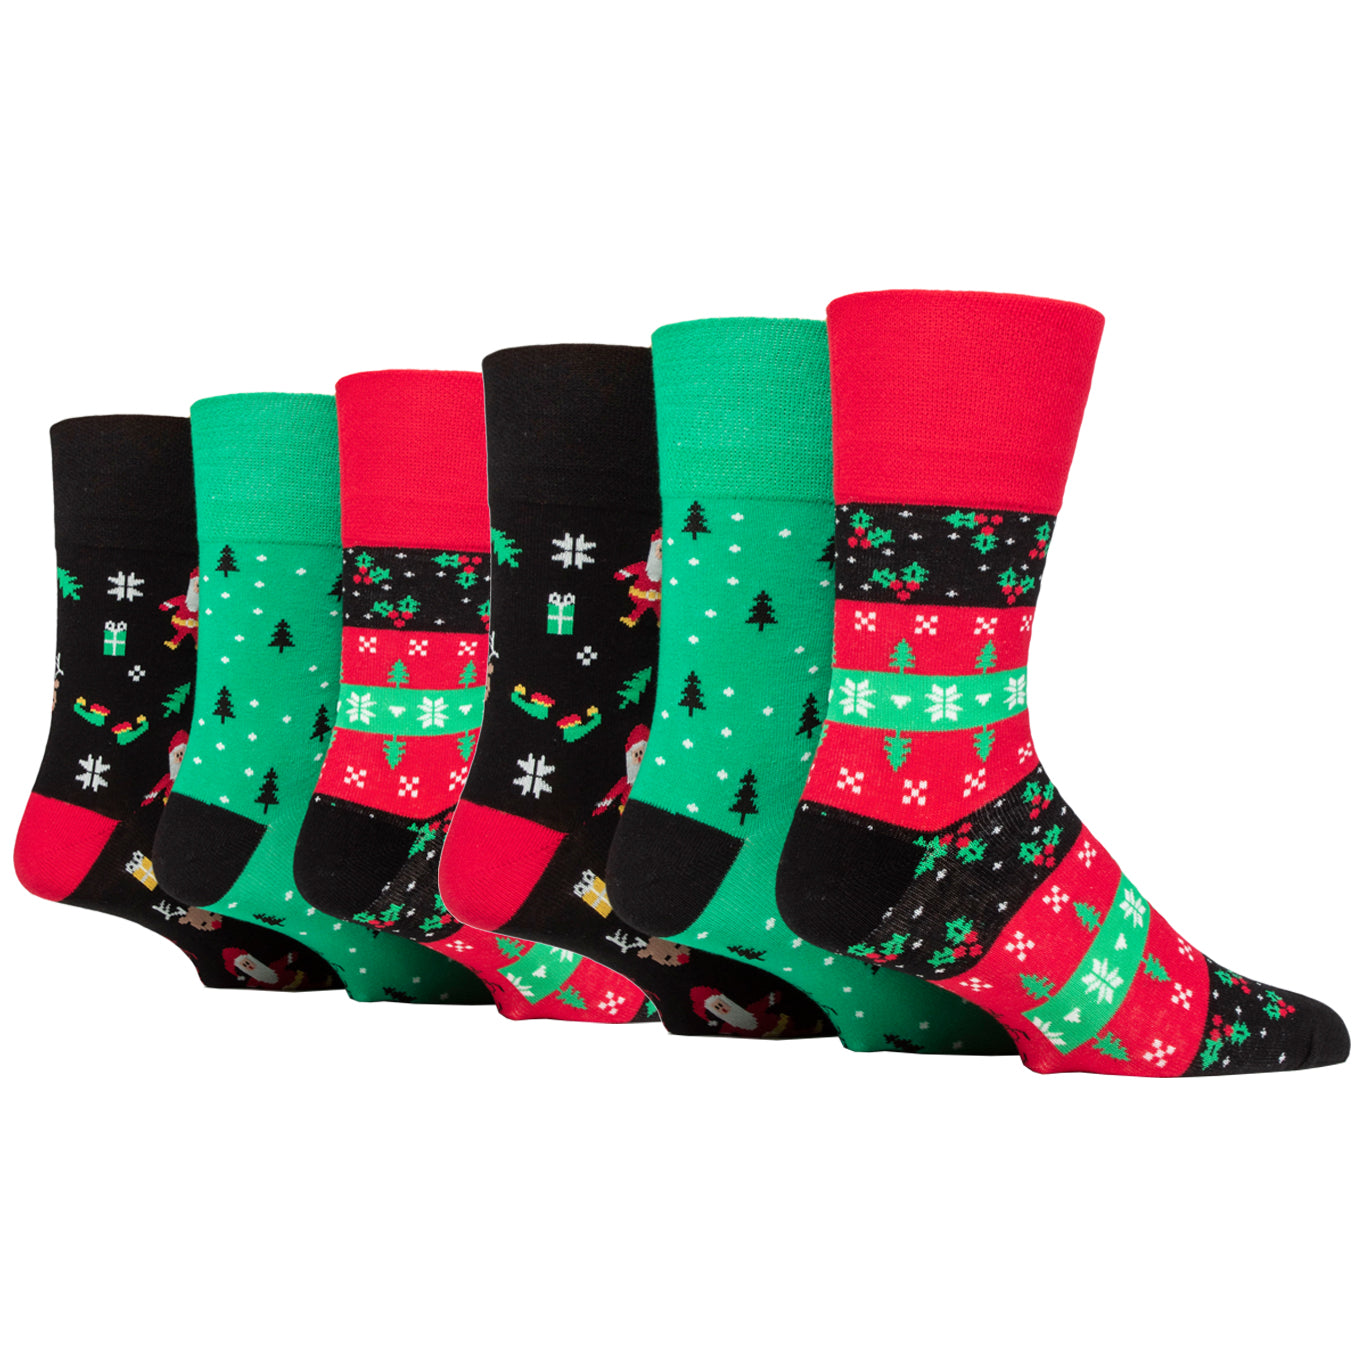 6 Pairs Men's Gentle Grip Cotton Socks Fun Feet Christmas Holly/Trees/Santa's